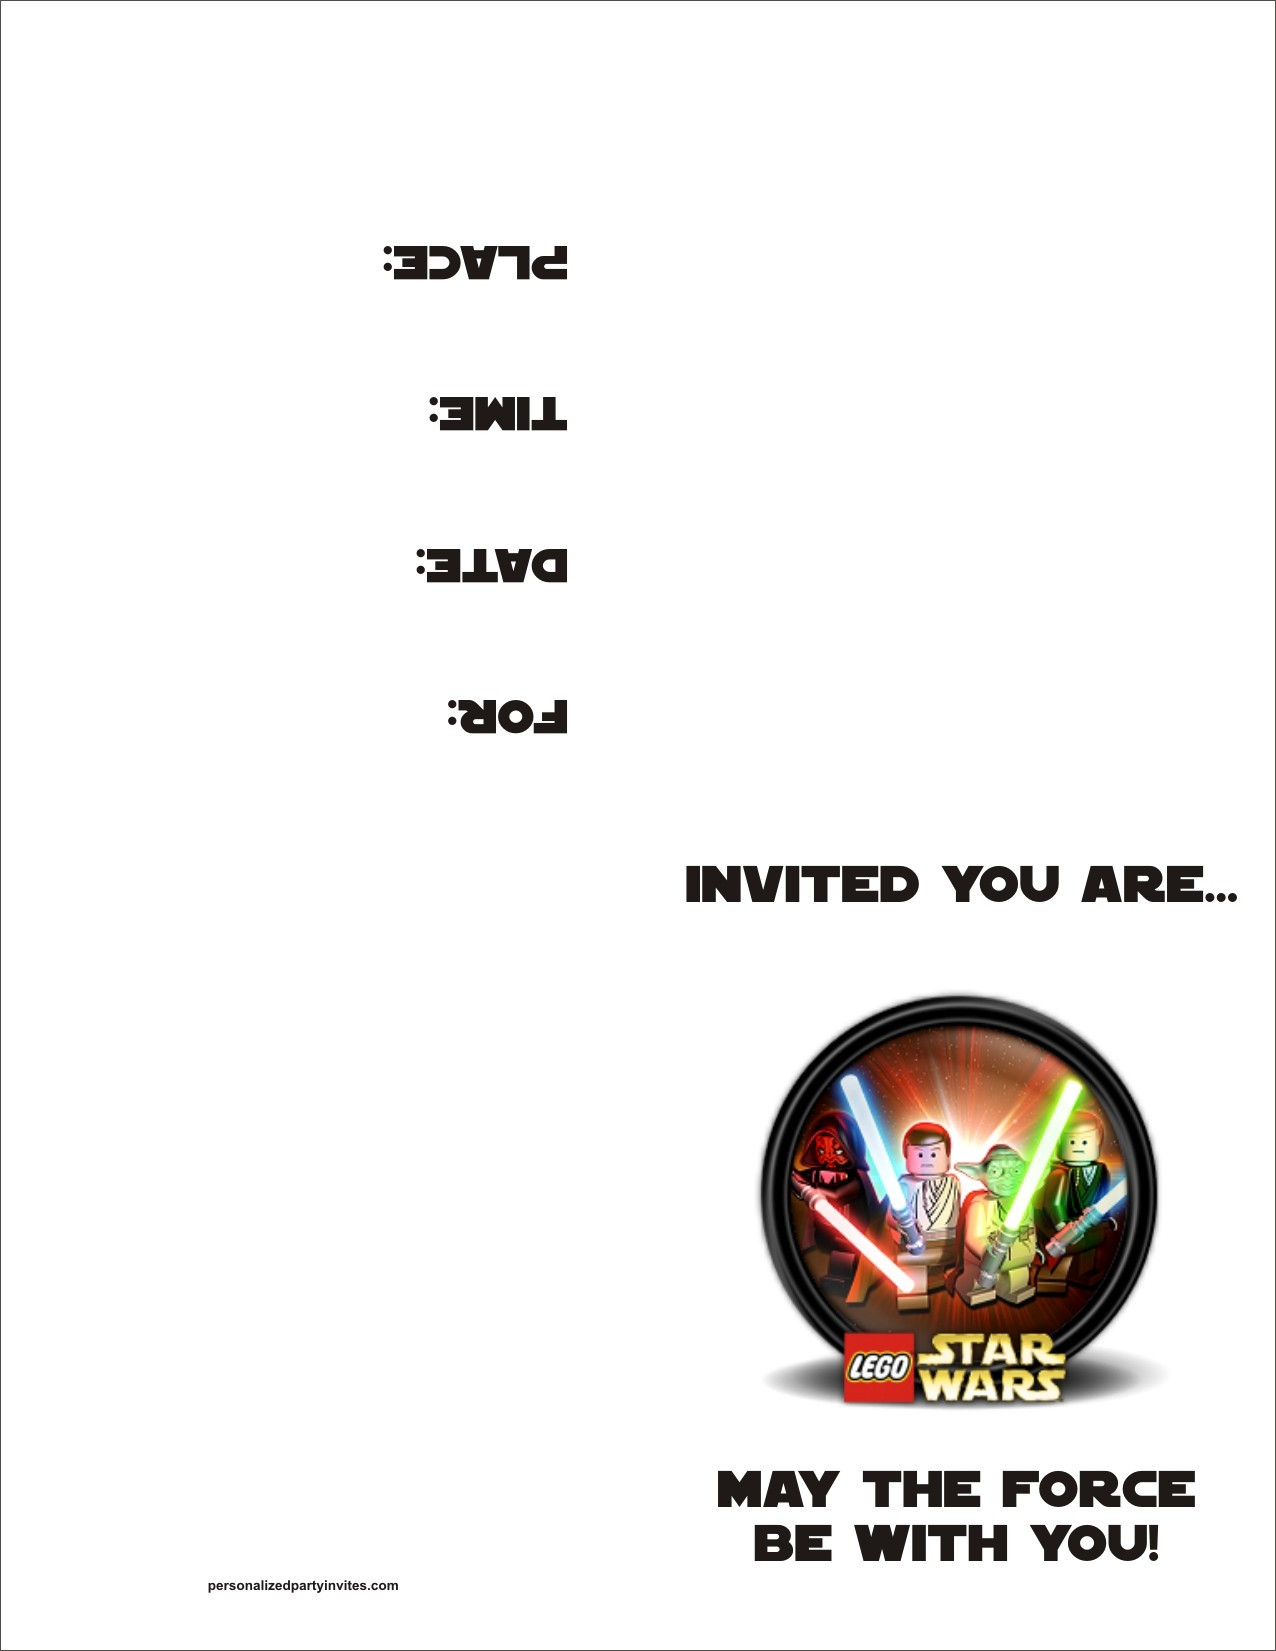 Star Wars Birthday Invitations Printable
 Lego Star Wars FREE Printable Birthday Party Invitation